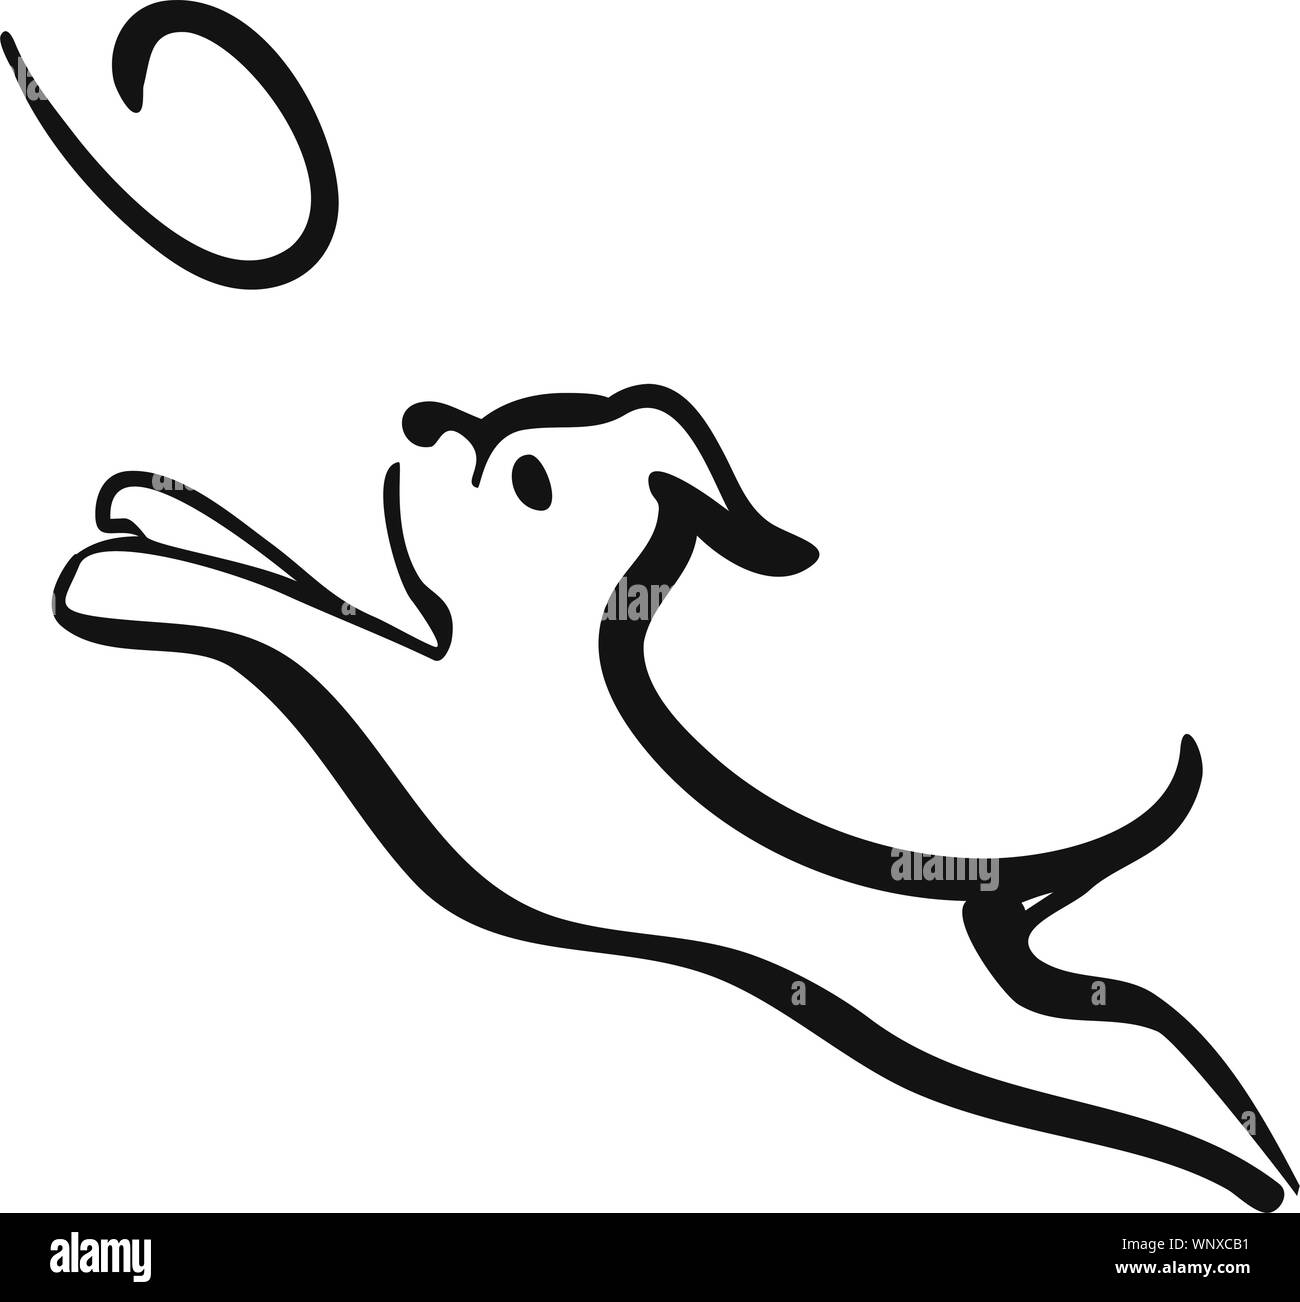 Cute dog head line art drawingvVector Illustration of Isolated Dog agility training Dog Jumping and Catching Disc. head line art drawing Silhouette on Stock Vector